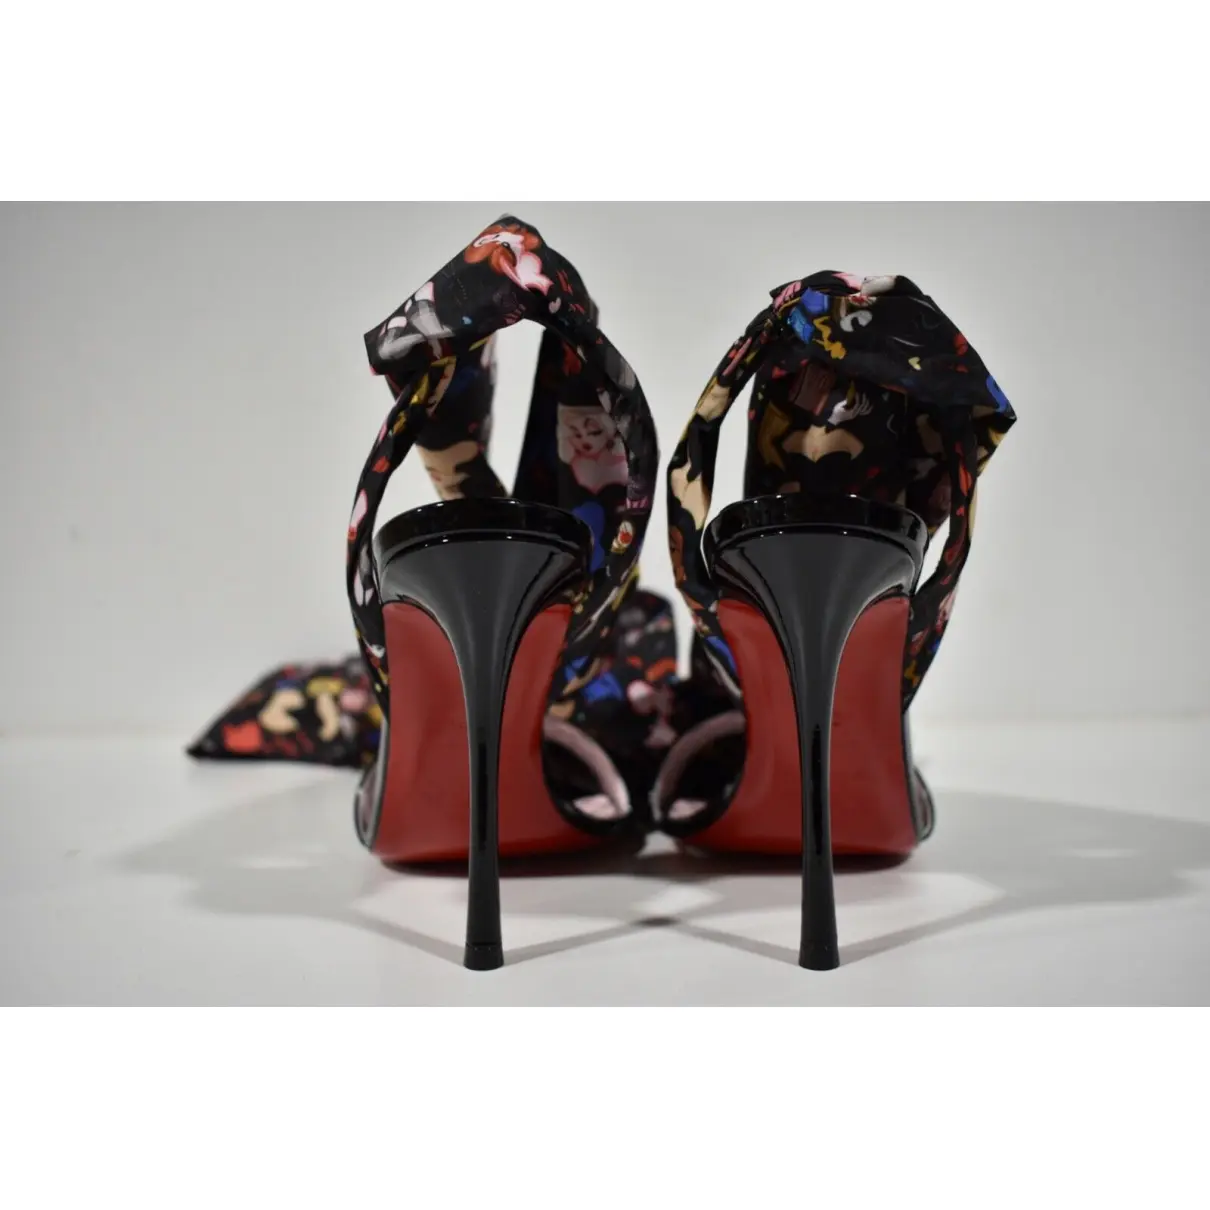 Luxury Christian Louboutin Sandals Women